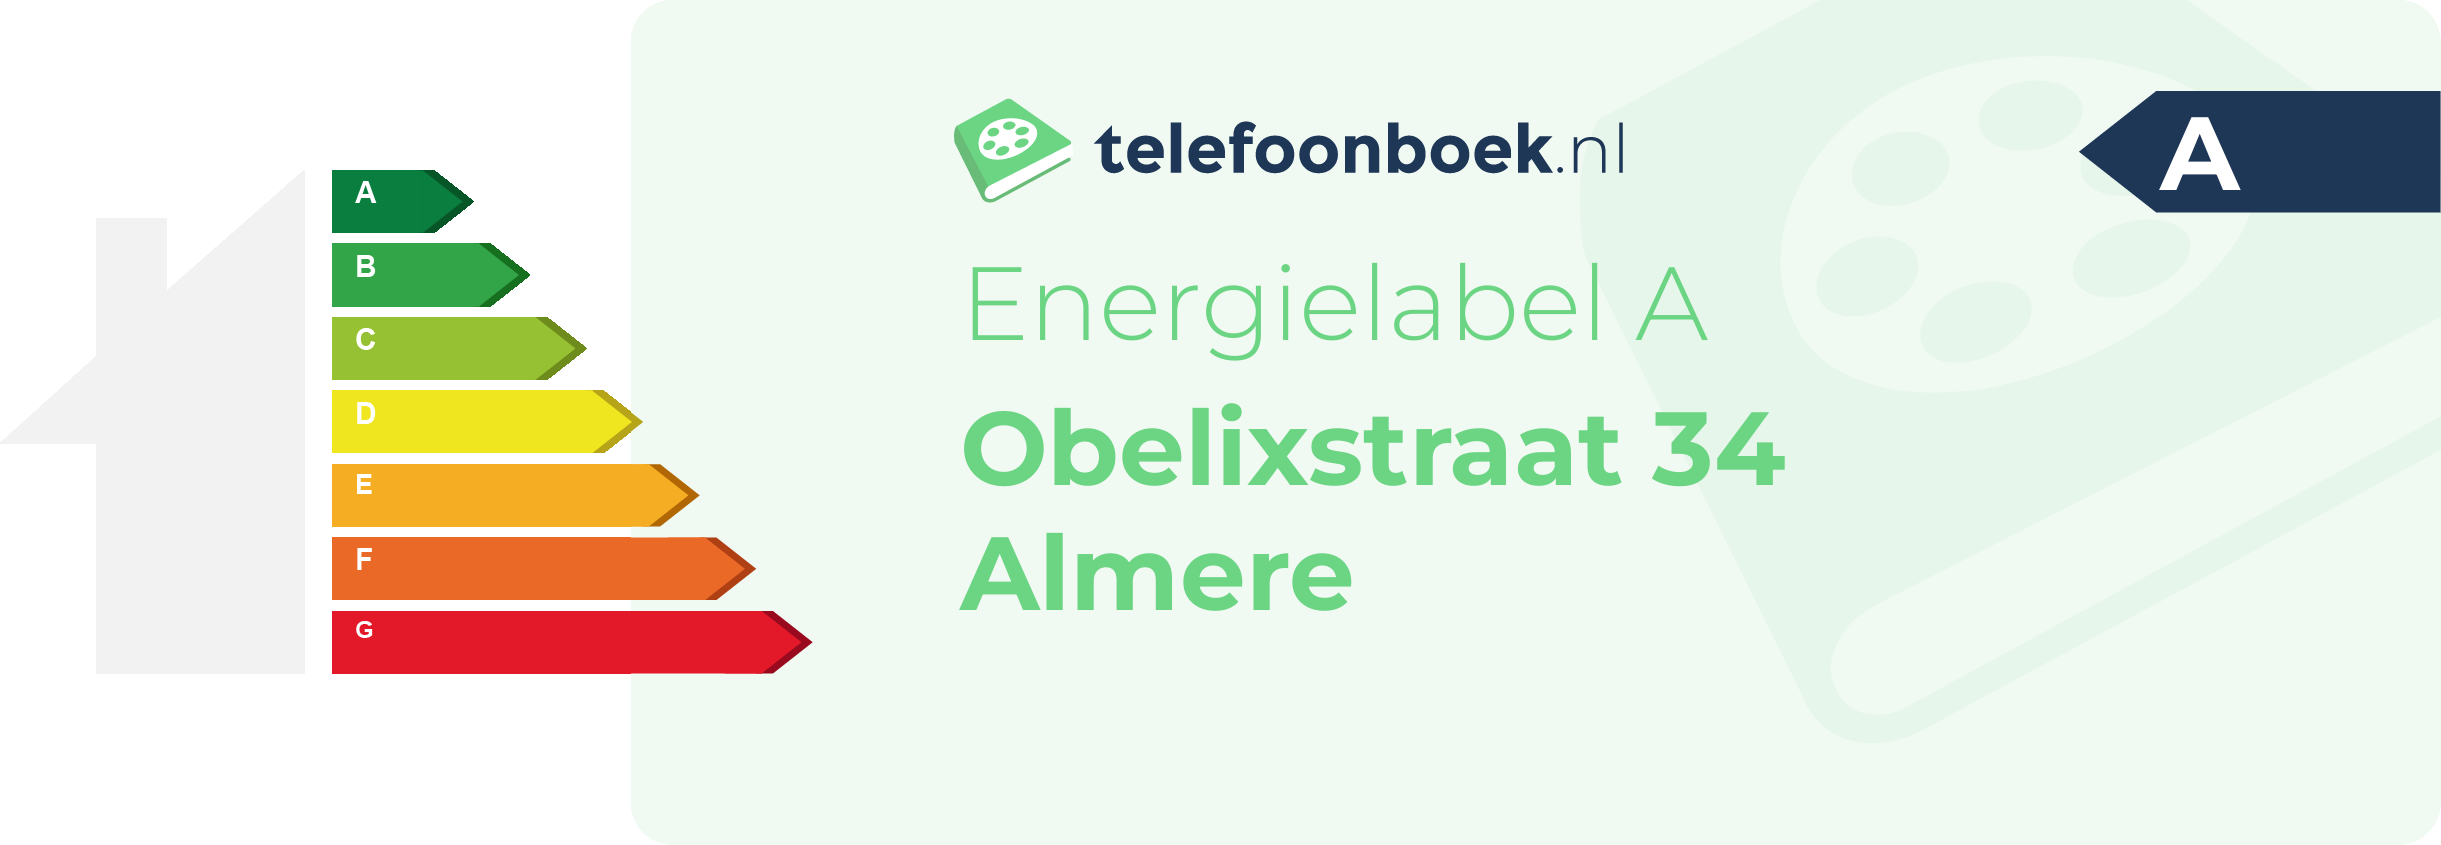 Energielabel Obelixstraat 34 Almere